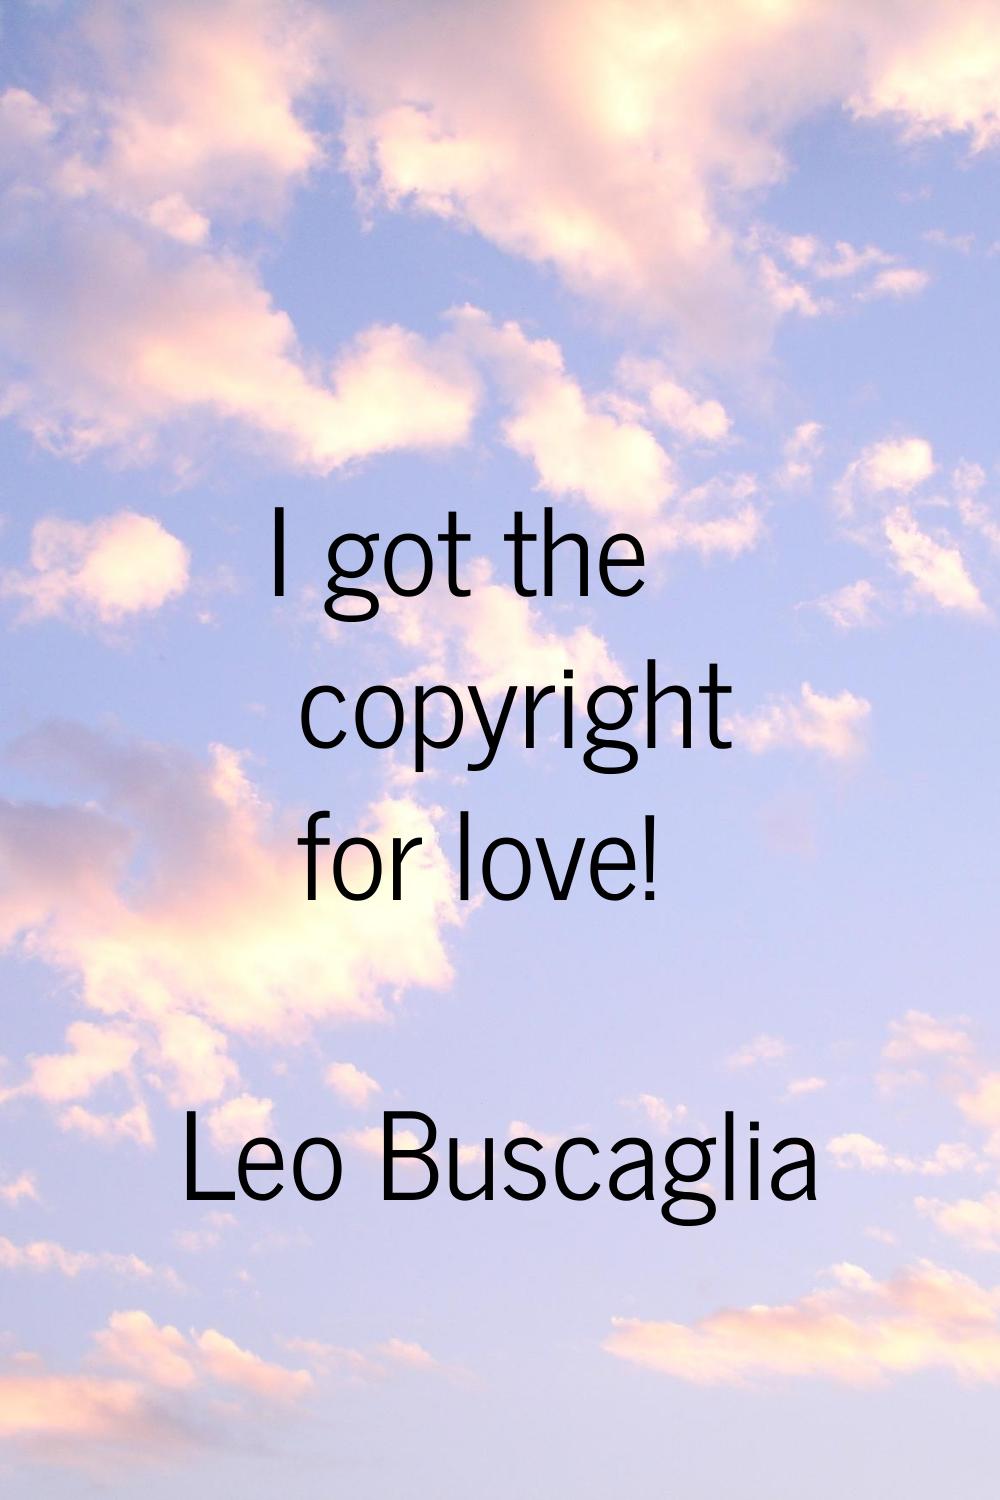 I got the copyright for love!